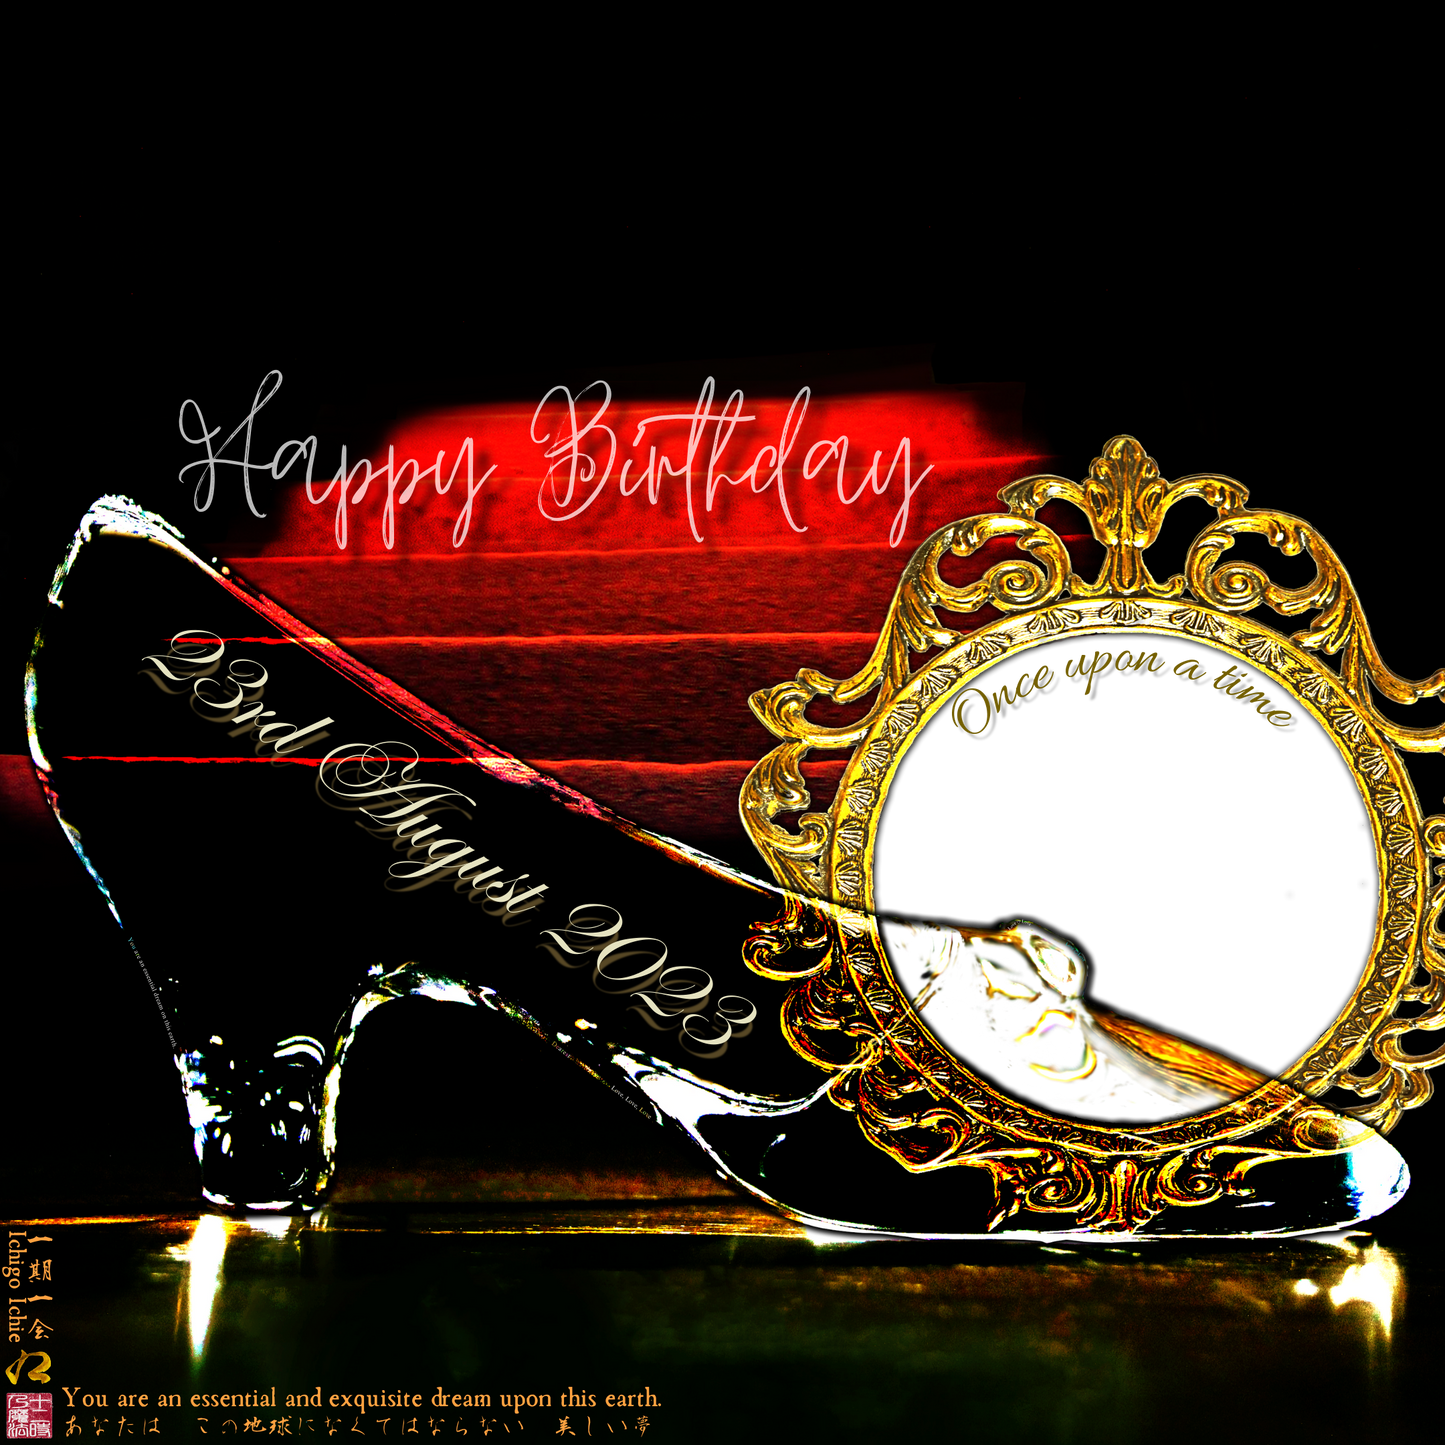 Happy Birthday Glass Slipper "Ichigo Ichie" 23rd August 2023 the Right (1-of-1) NFT Art